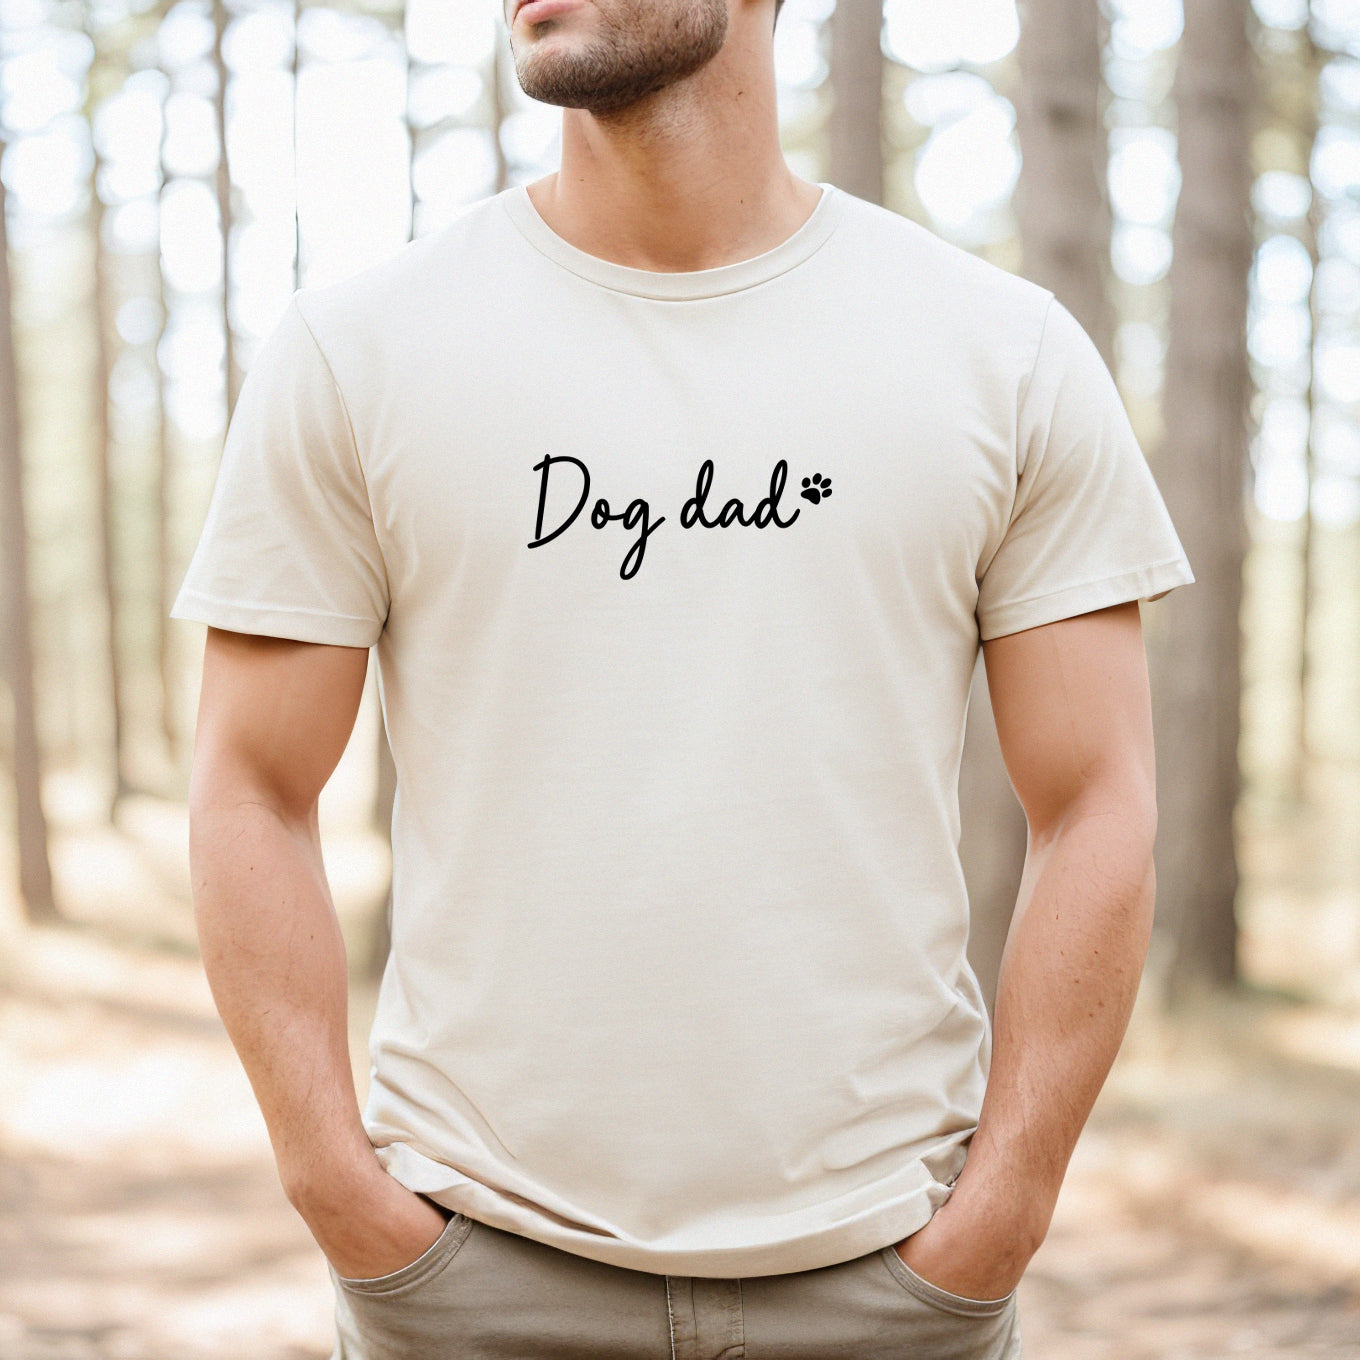 dog dad t-shirt